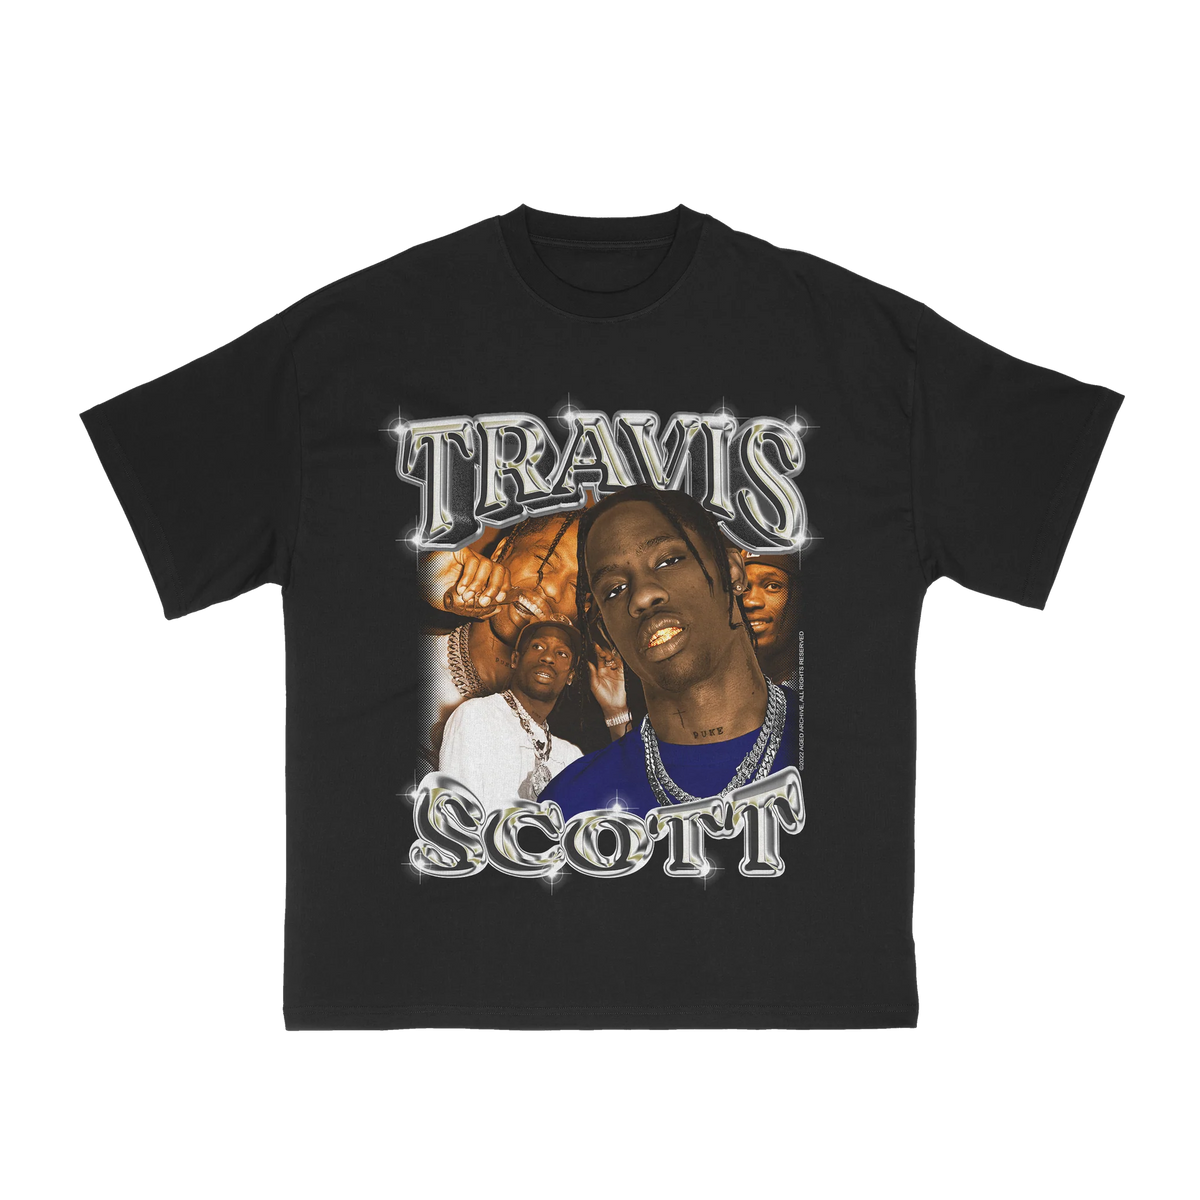 Camiseta Aged Archive "Travis Scott" Preto